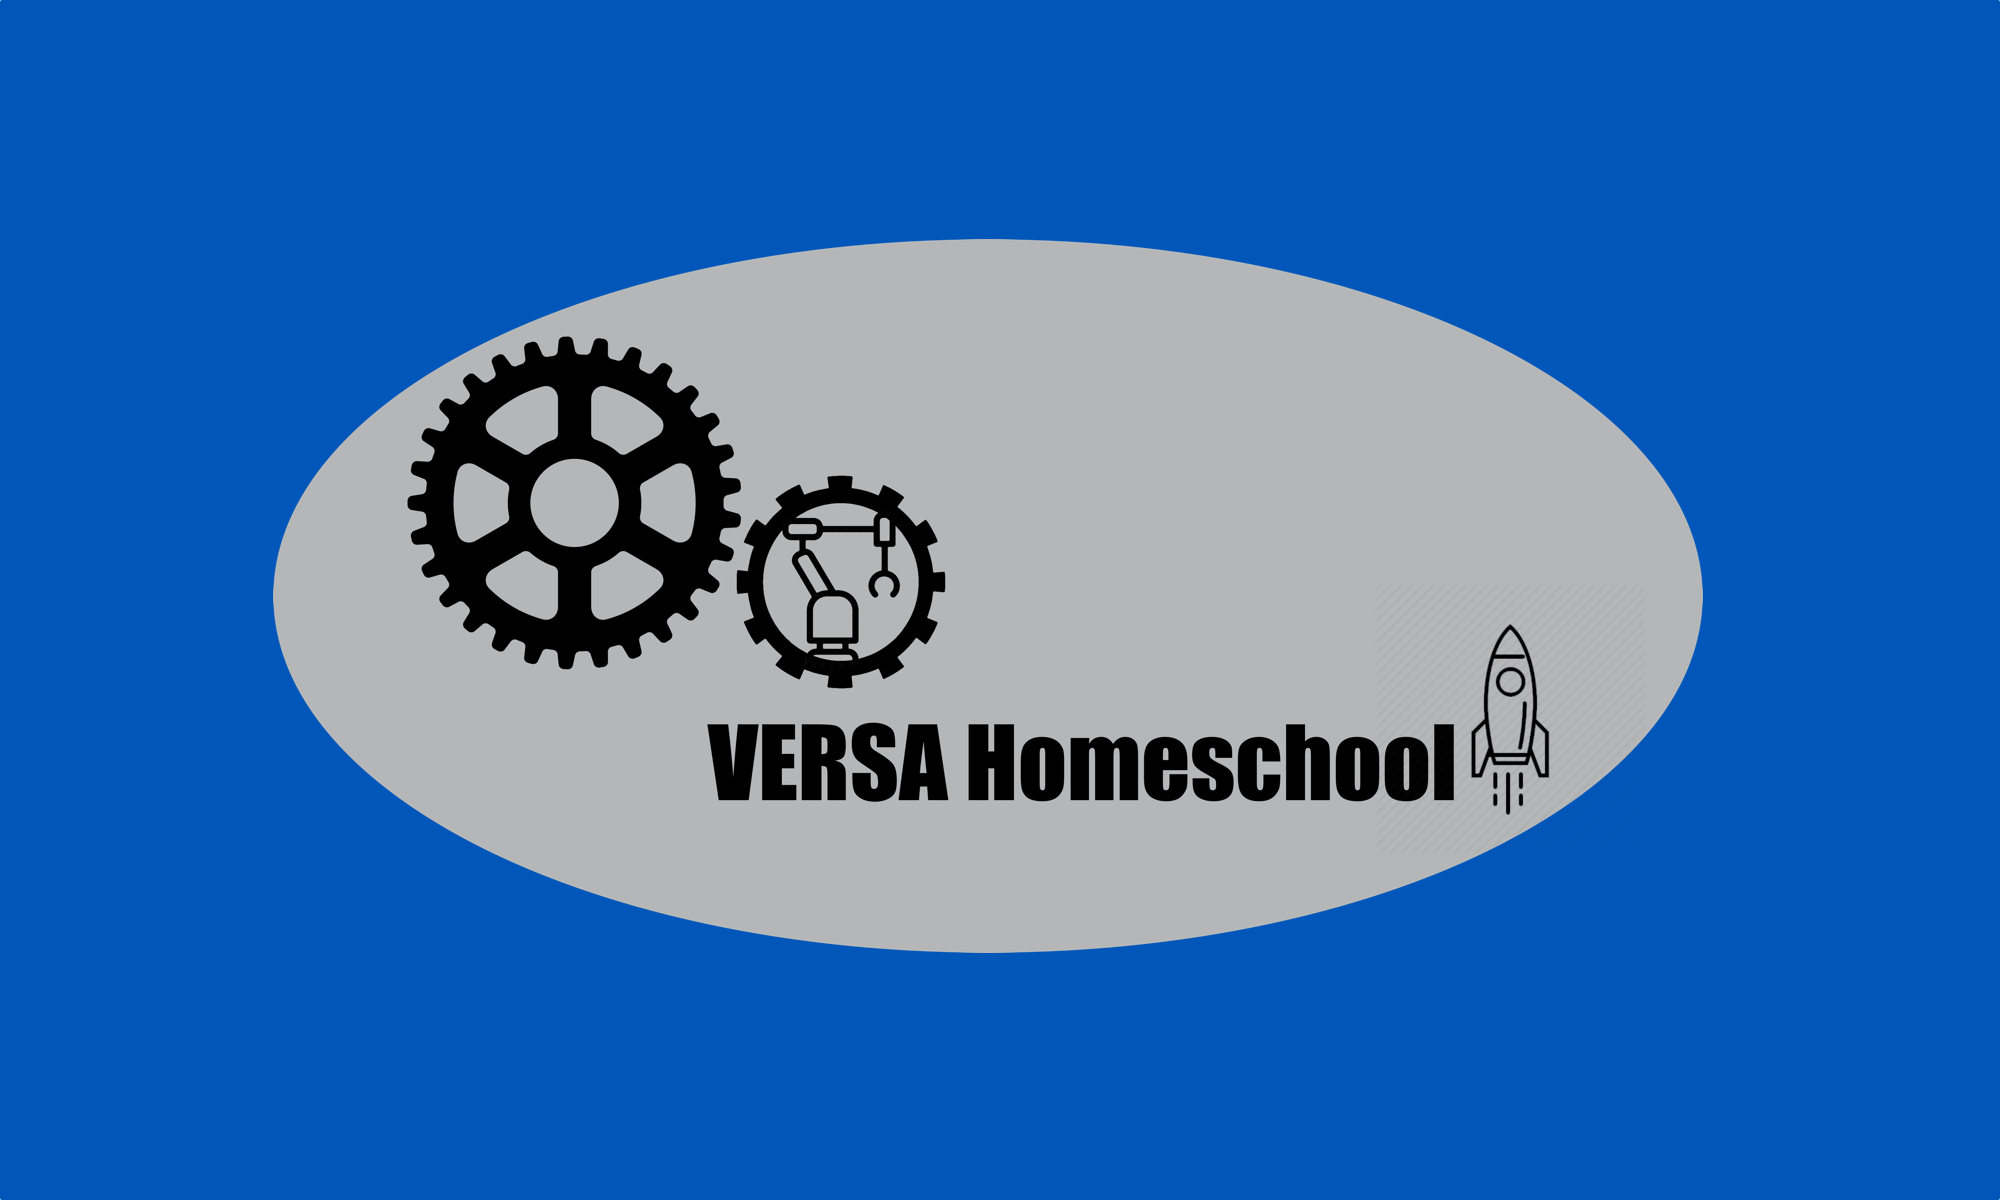 VERSA Homeschool